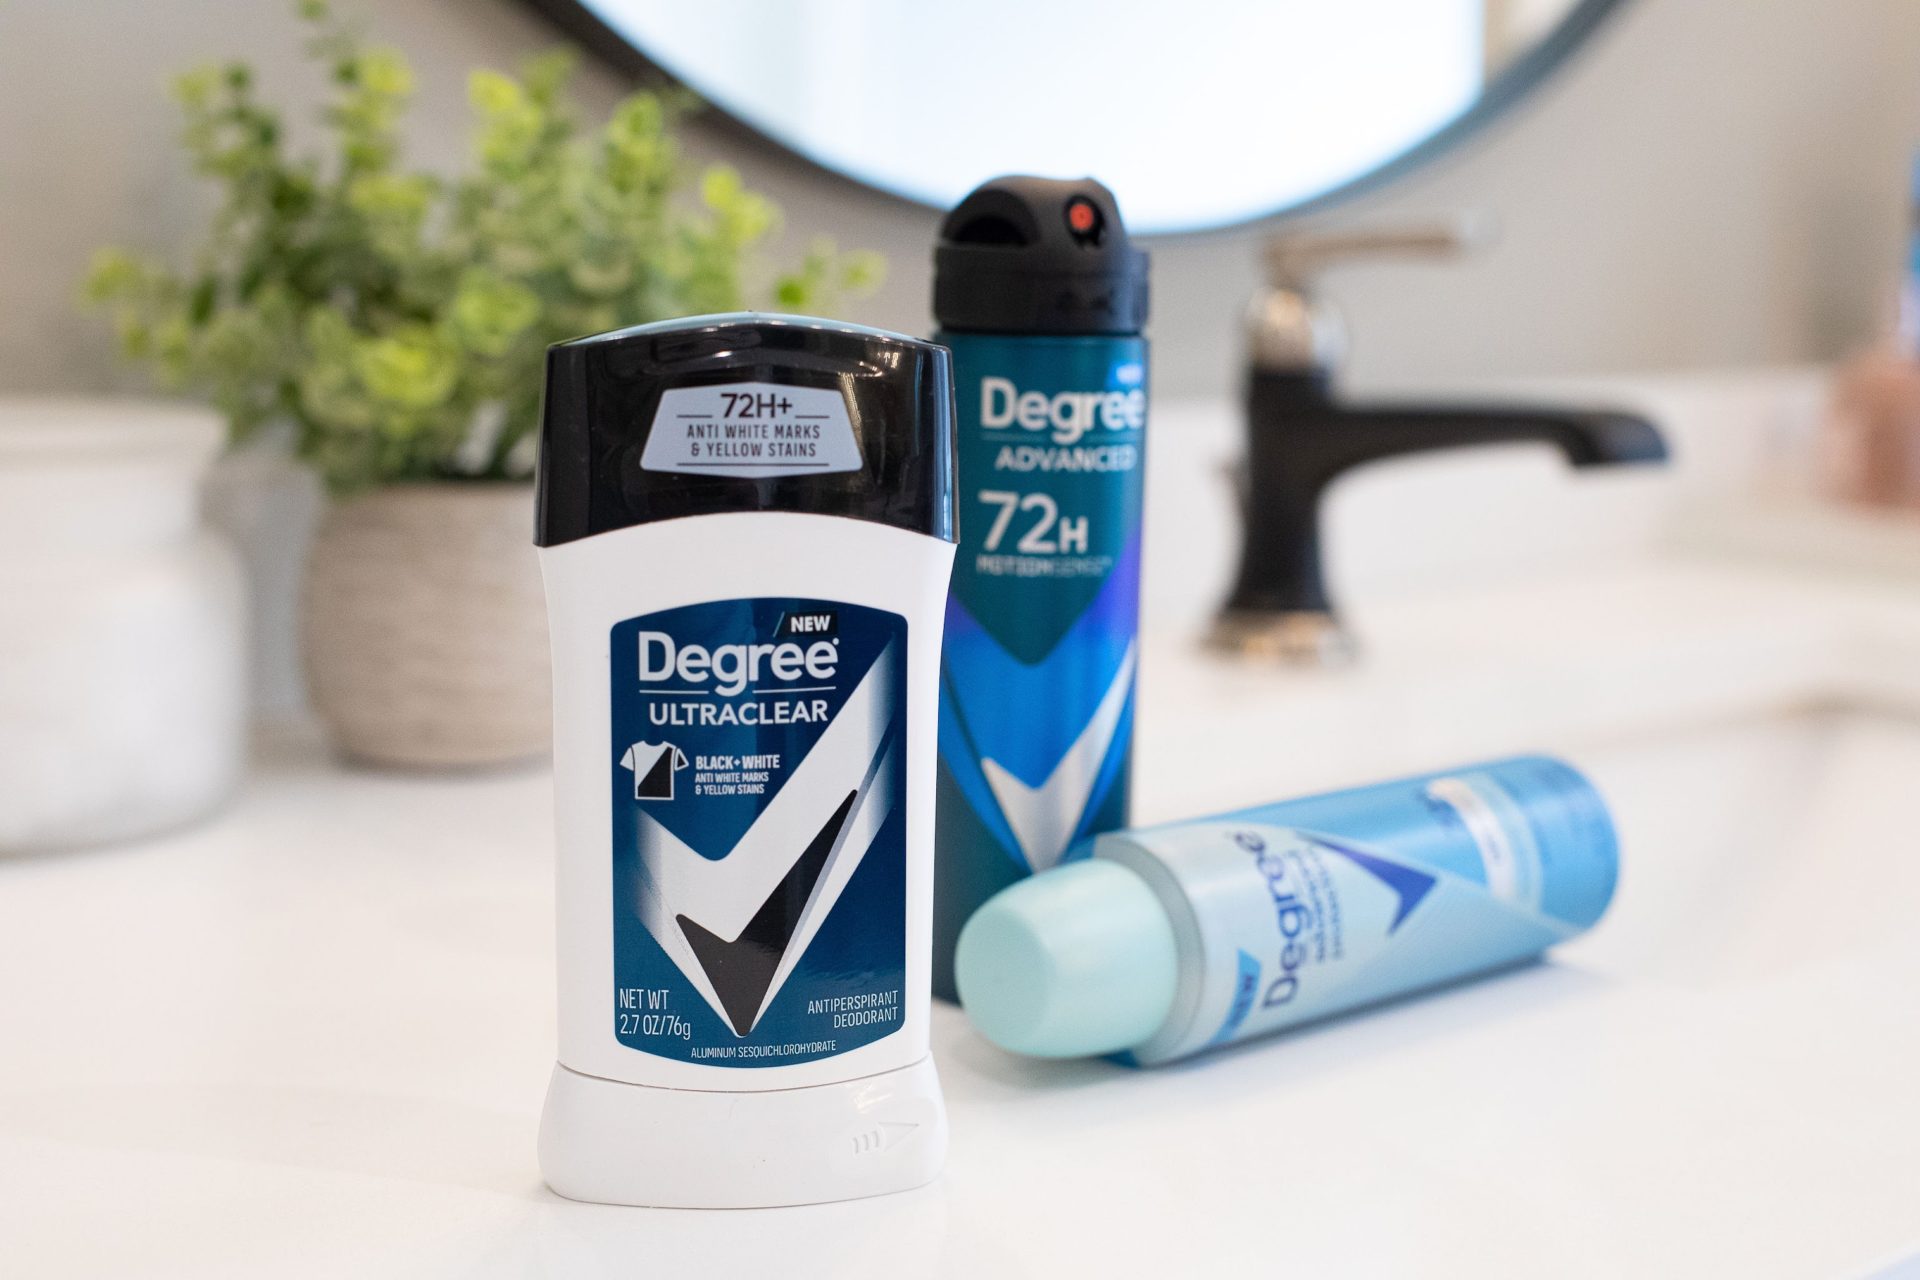 Degree Ultra Clear or Advanced Anitperspirant Deodorant Just $2.49 At Kroger (Regular Price $5.69)